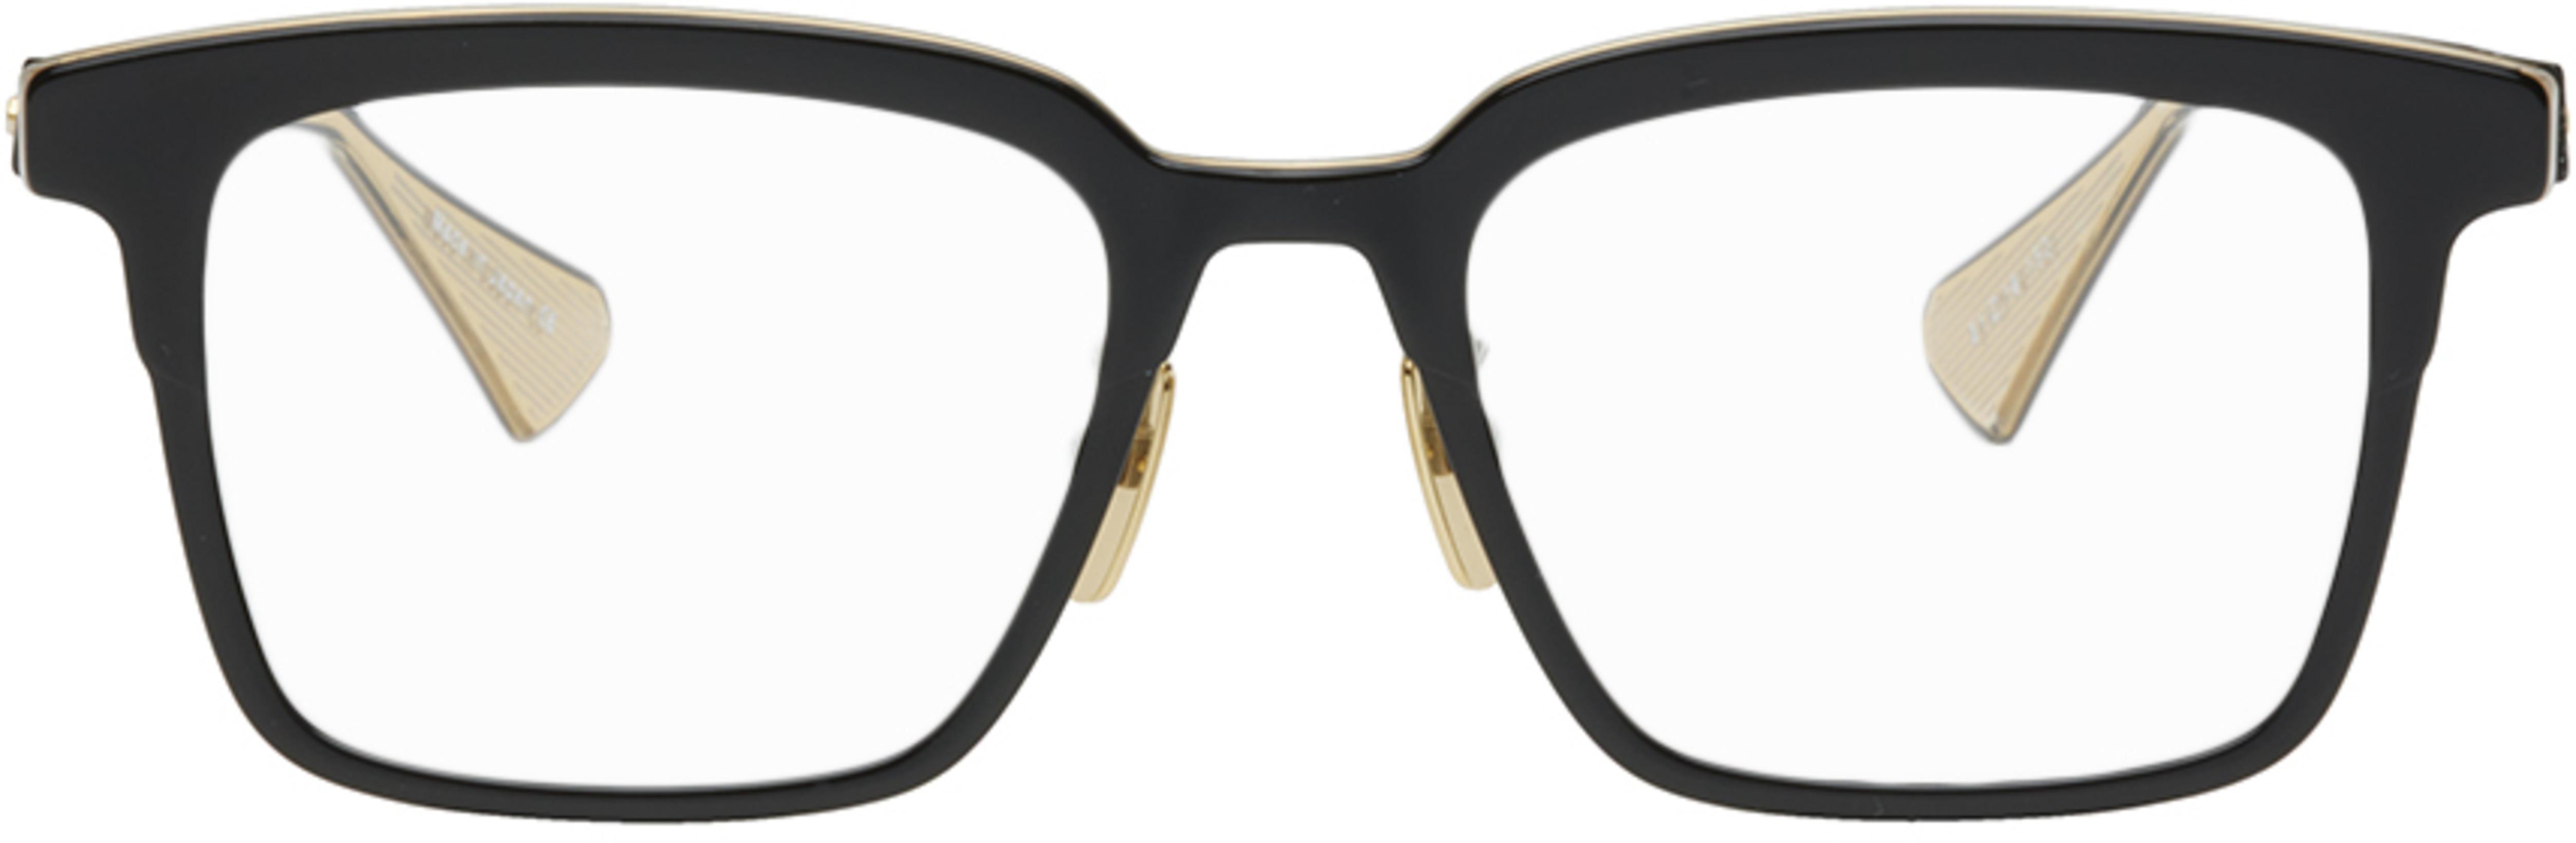 Black & Gold Polymath Glasses by DITA